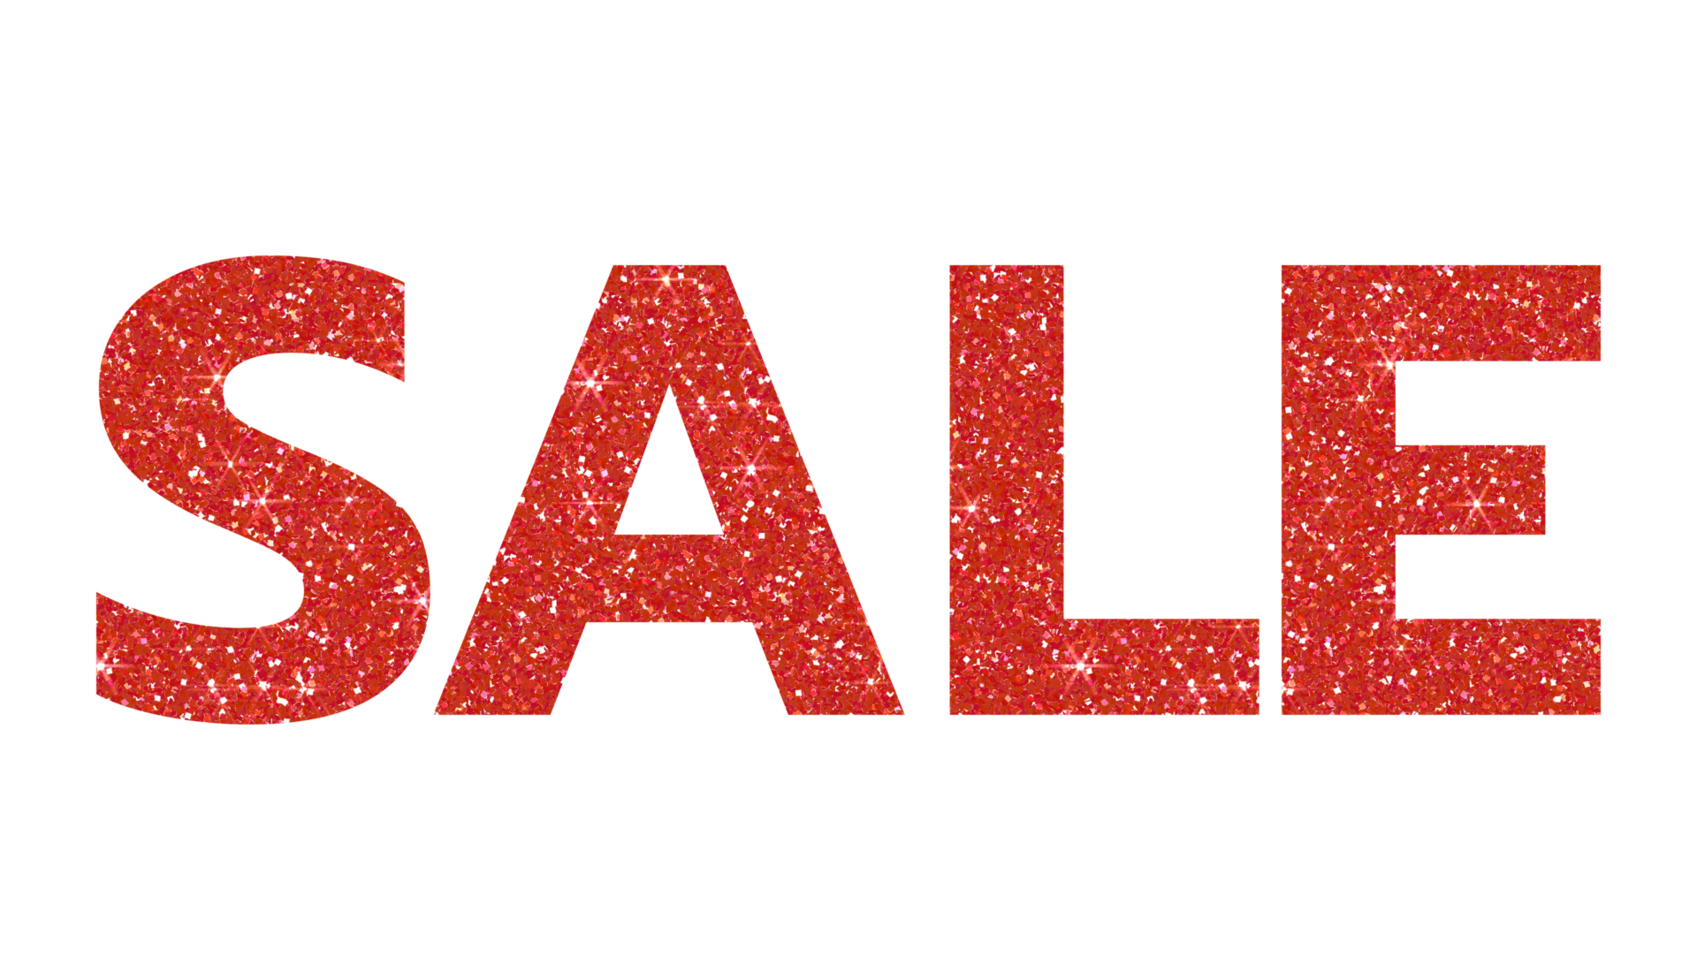 Red glitter sale message on transparent background, Sale banner, Sale icon, Design for decorating, background, wallpaper, illustration, png